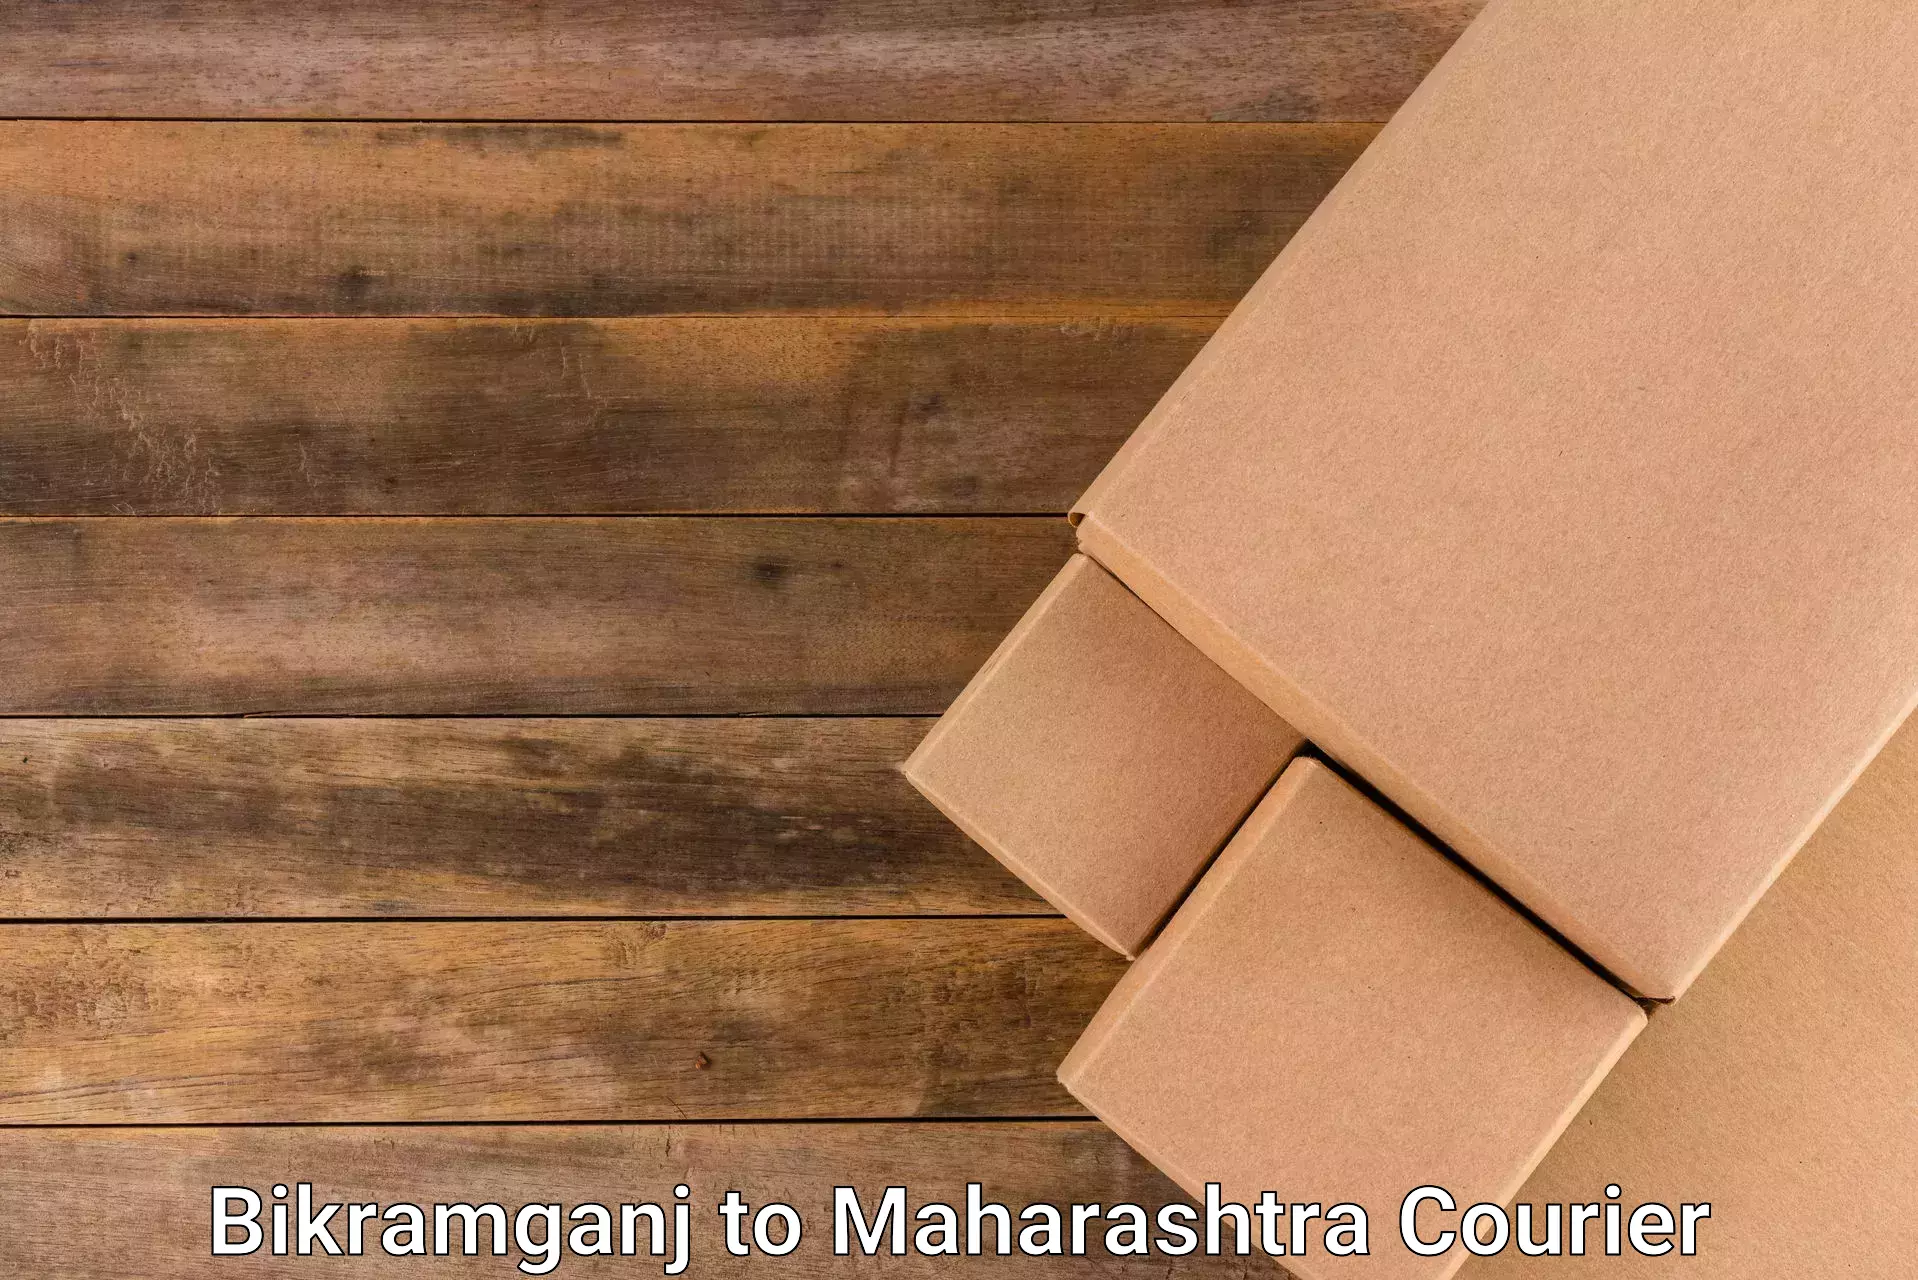 Courier rate comparison in Bikramganj to Maharashtra